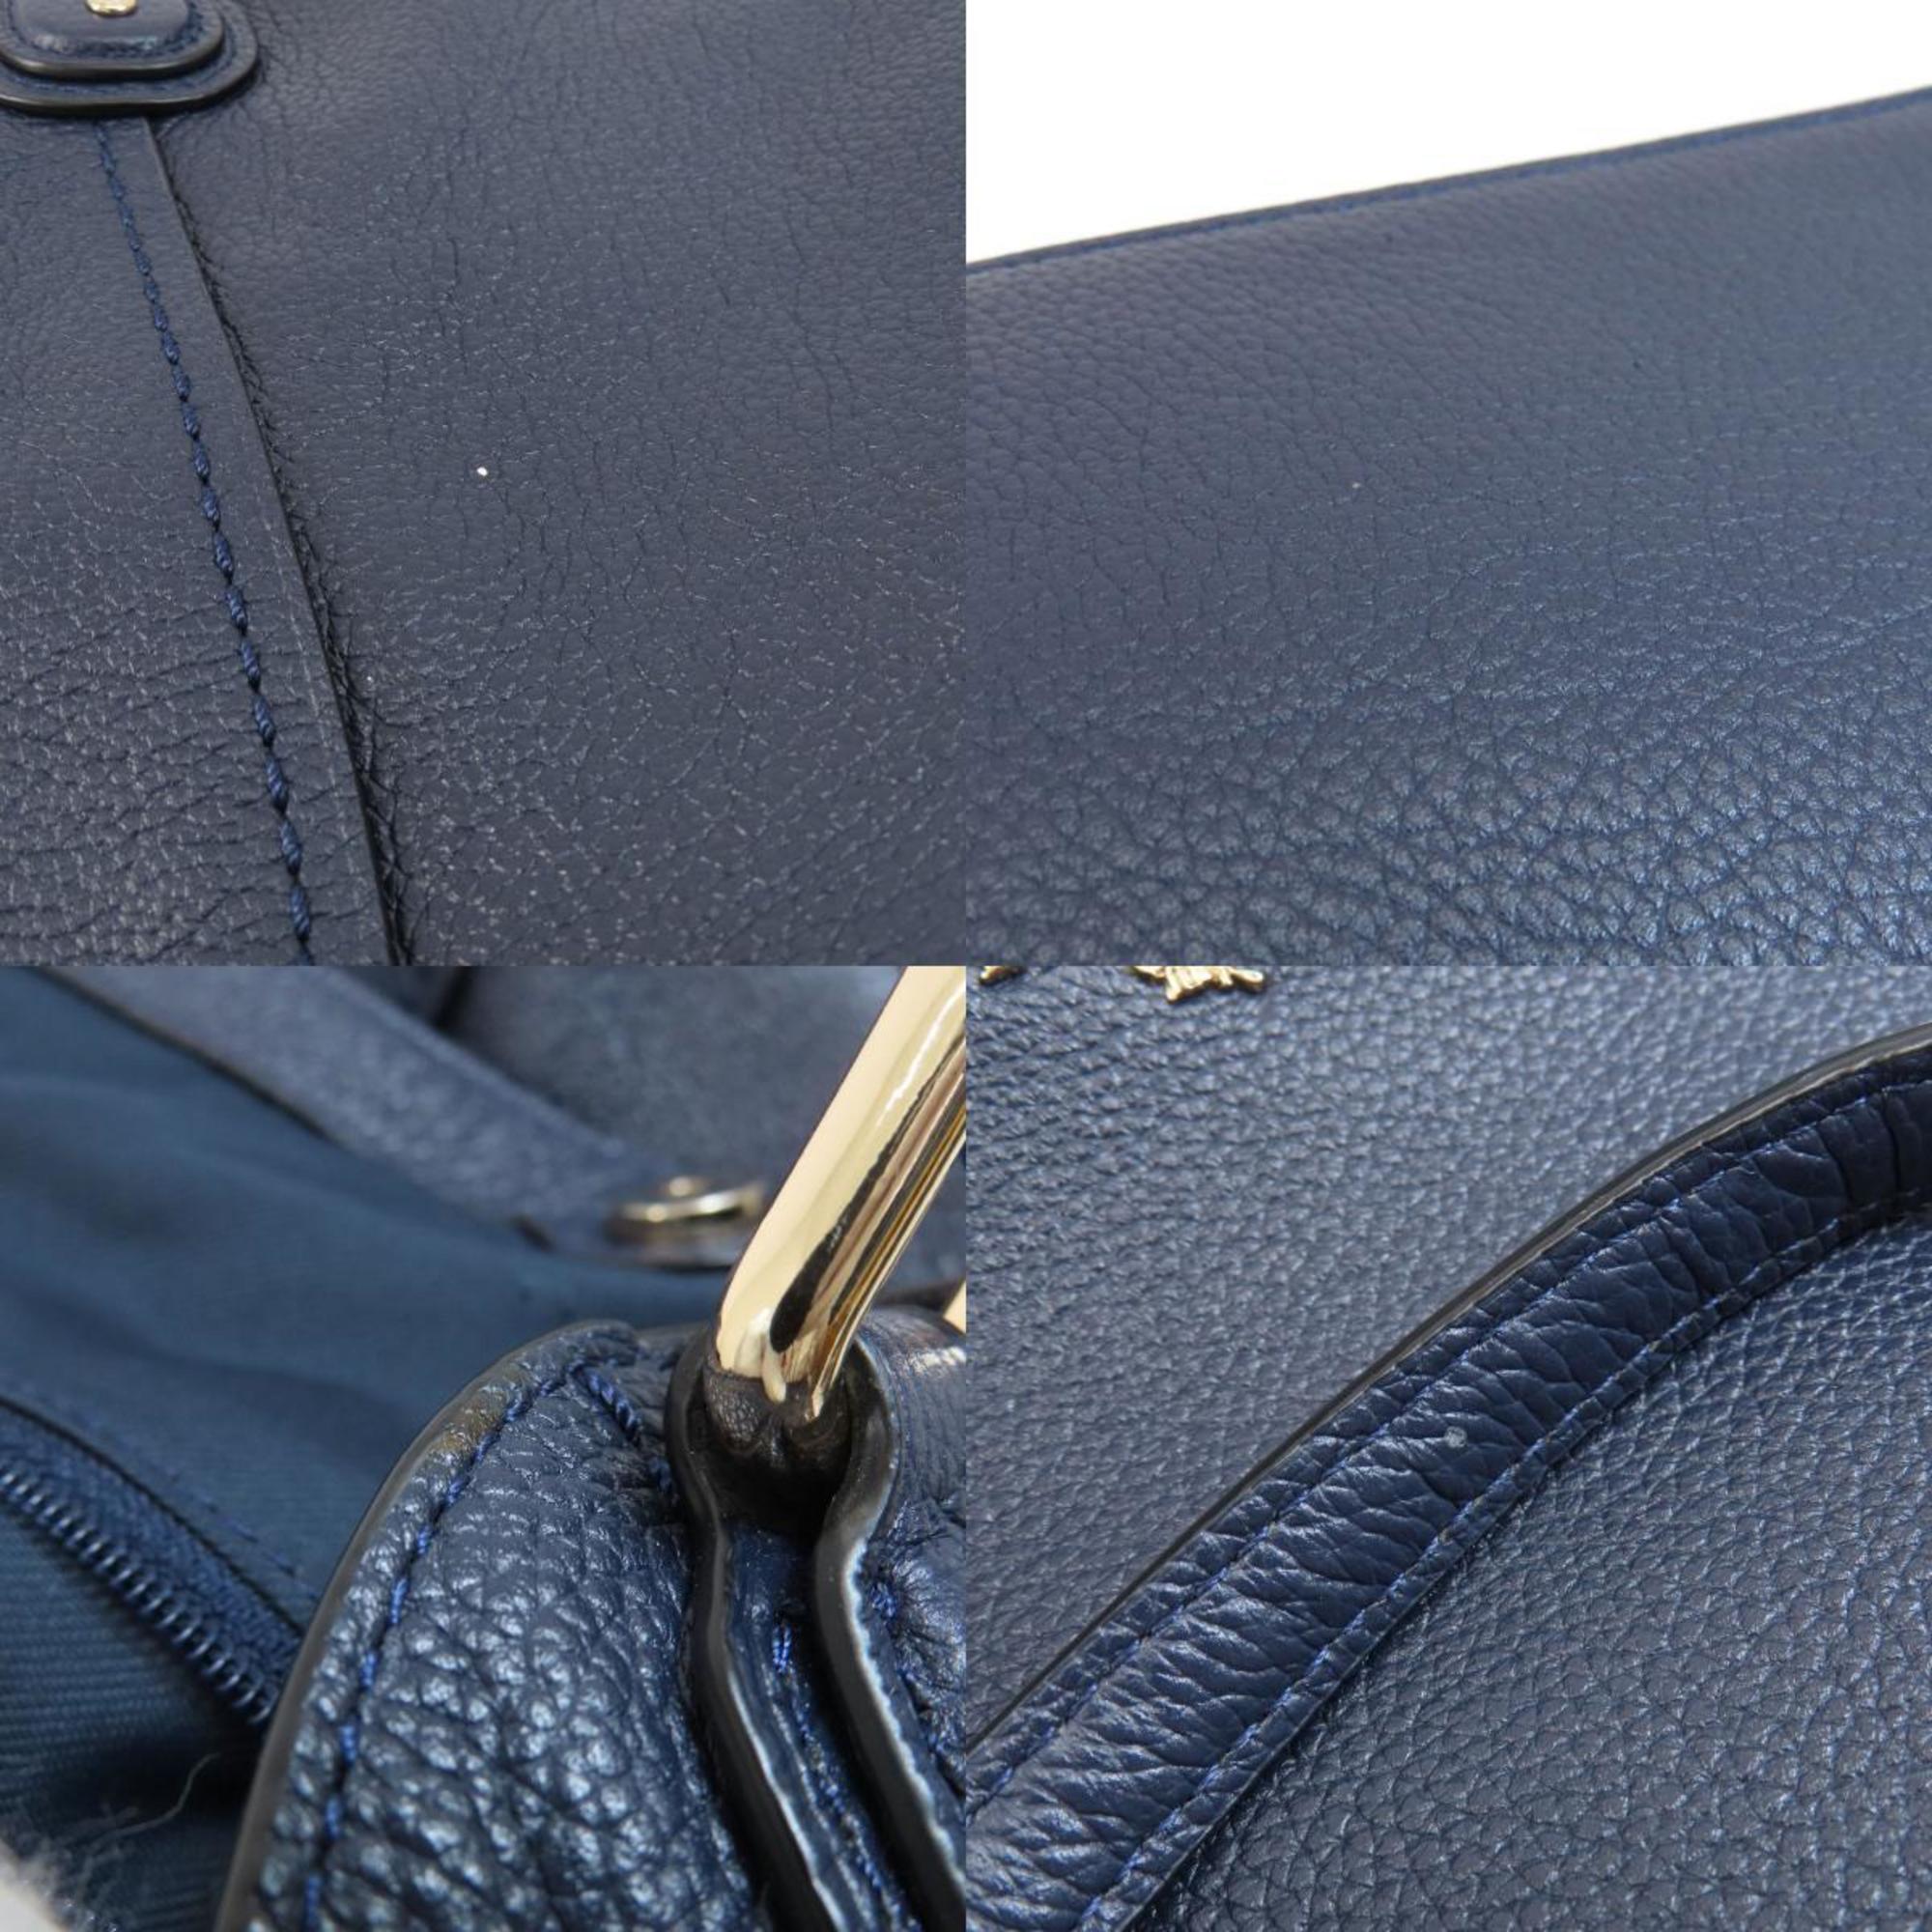 Coach 57124 handbag leather ladies